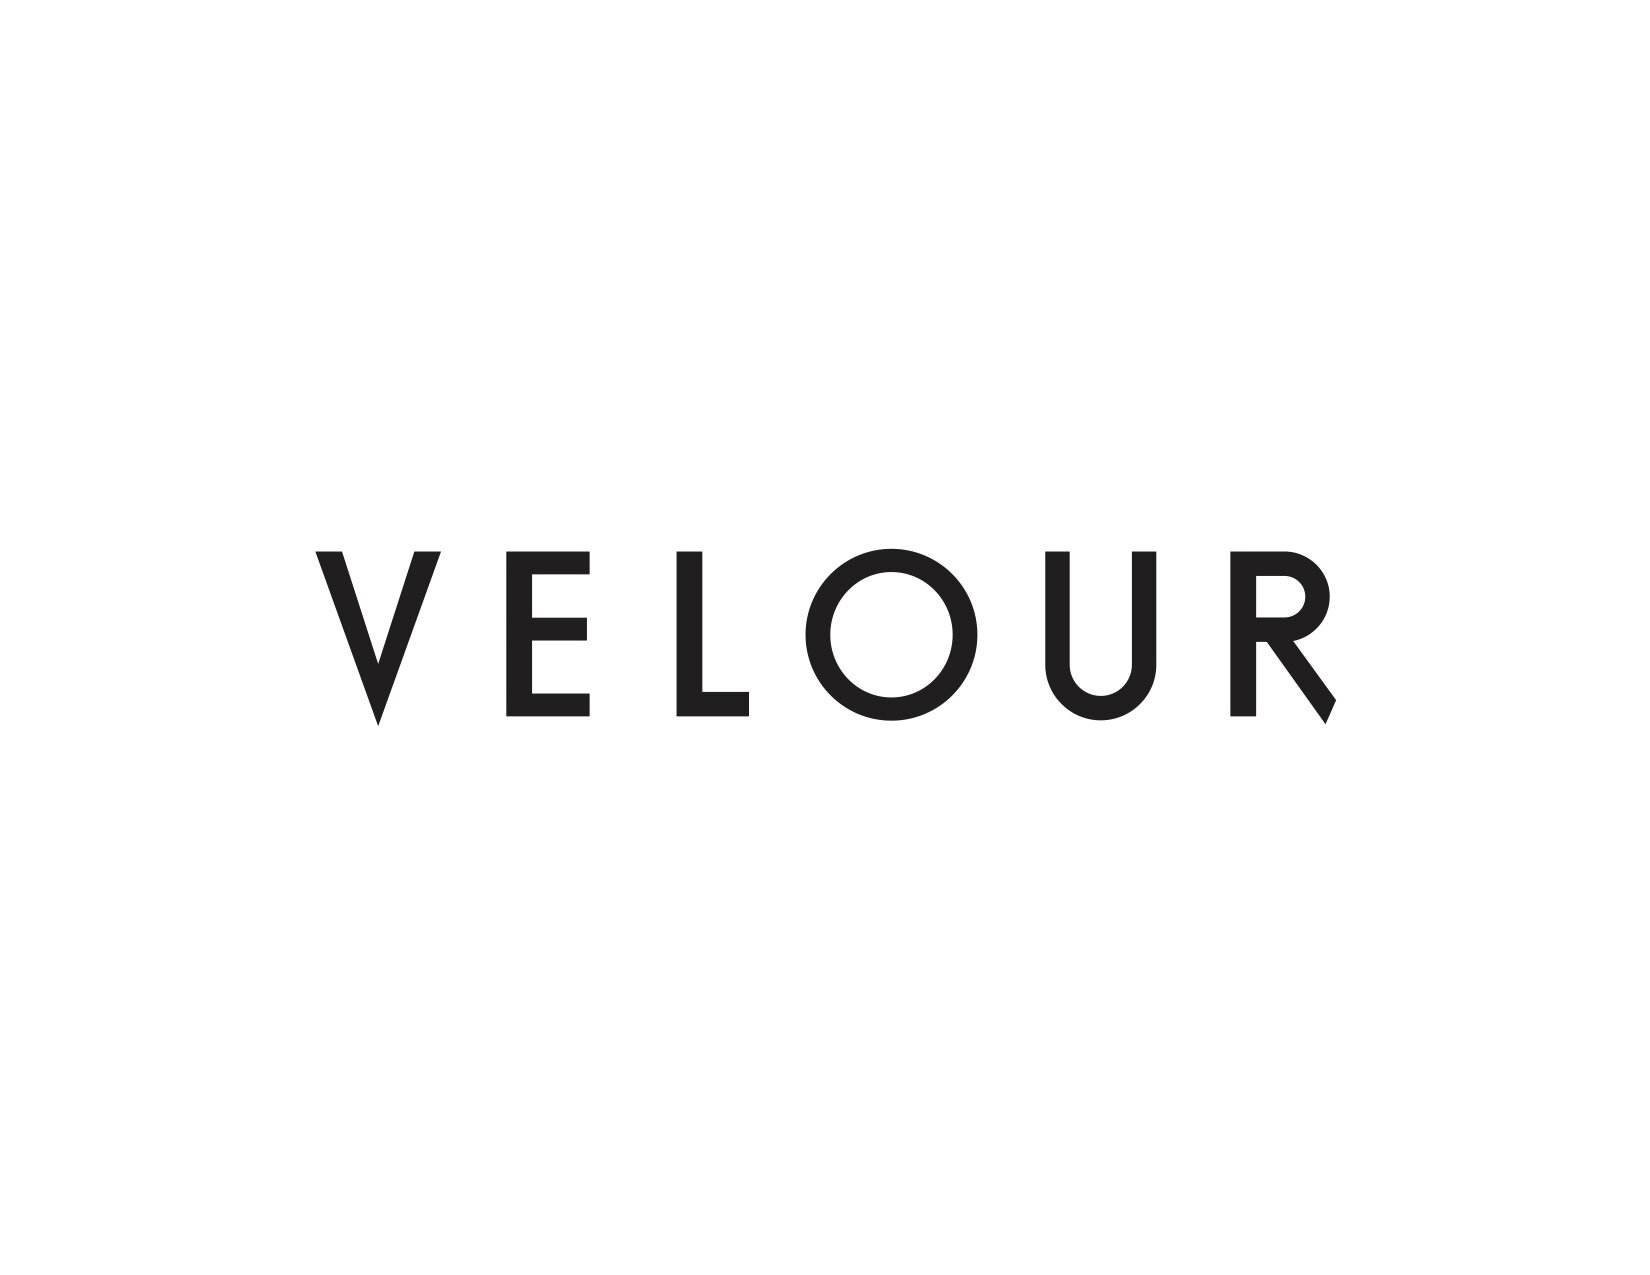 Velour_Wordmark_Logo.jpg